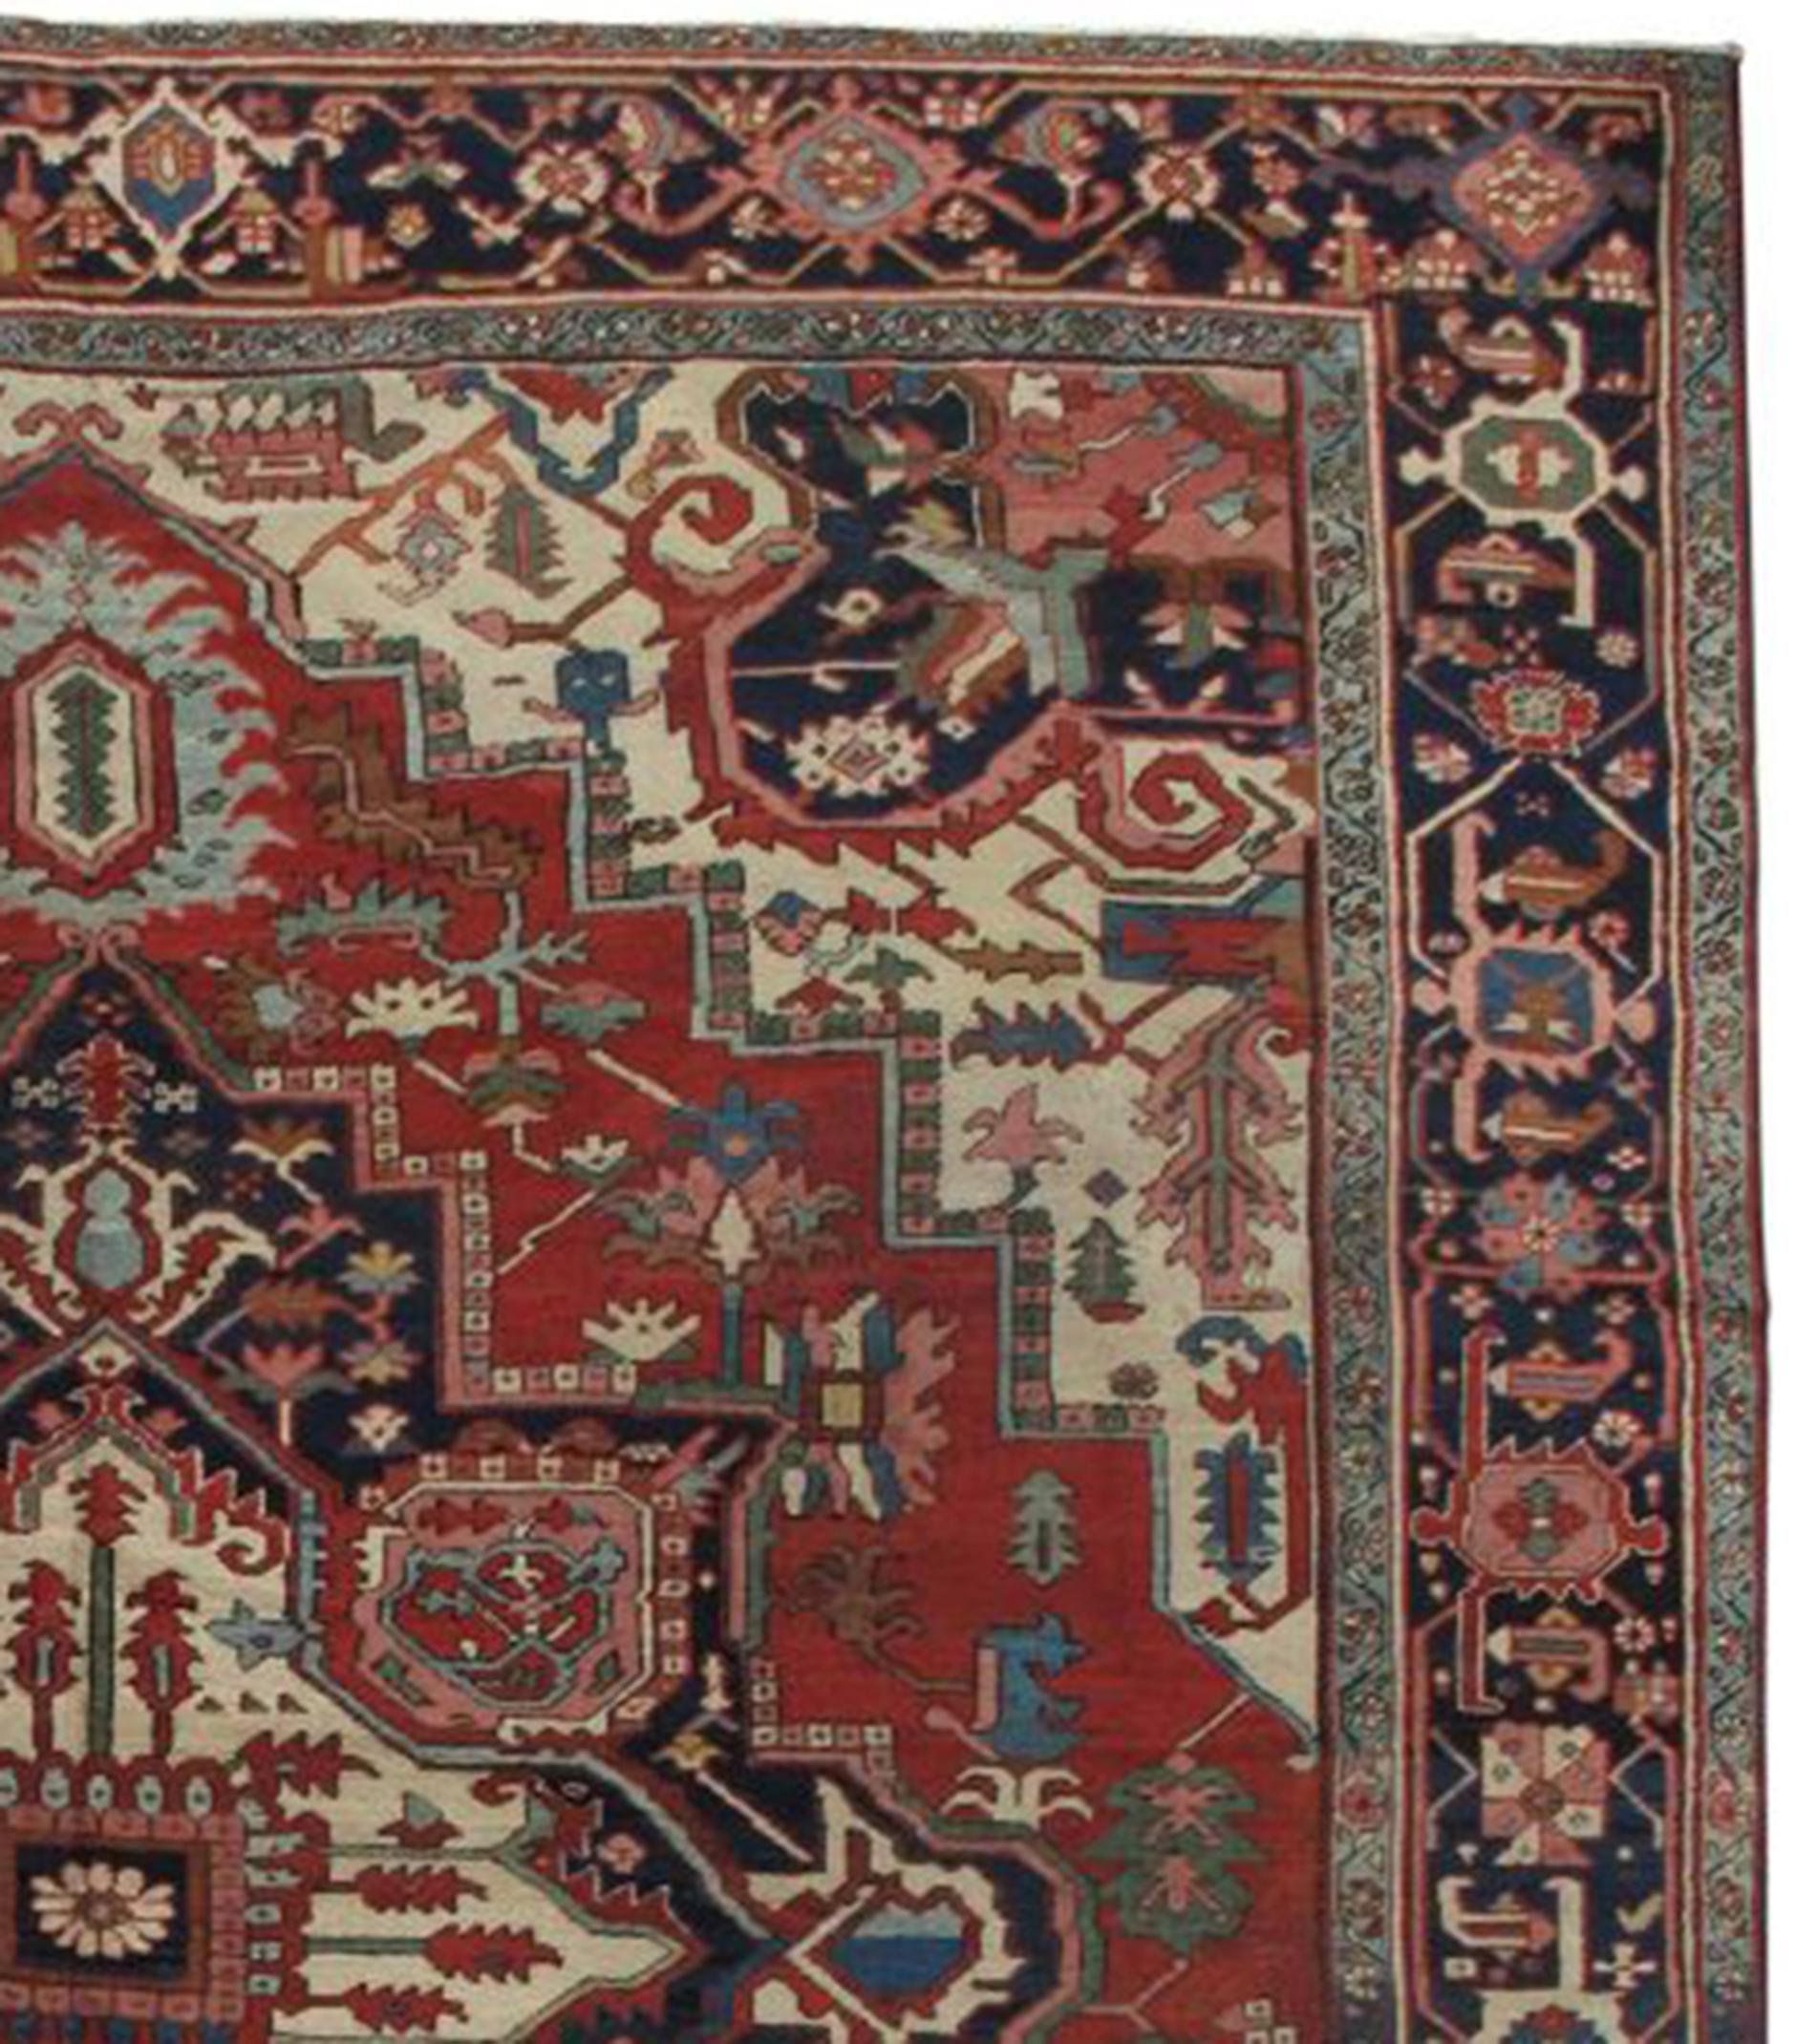 Antique Handsome Serapi Carpet, Handmade Wool Carpet Red Navy, Light Blue, Ivory For Sale 1